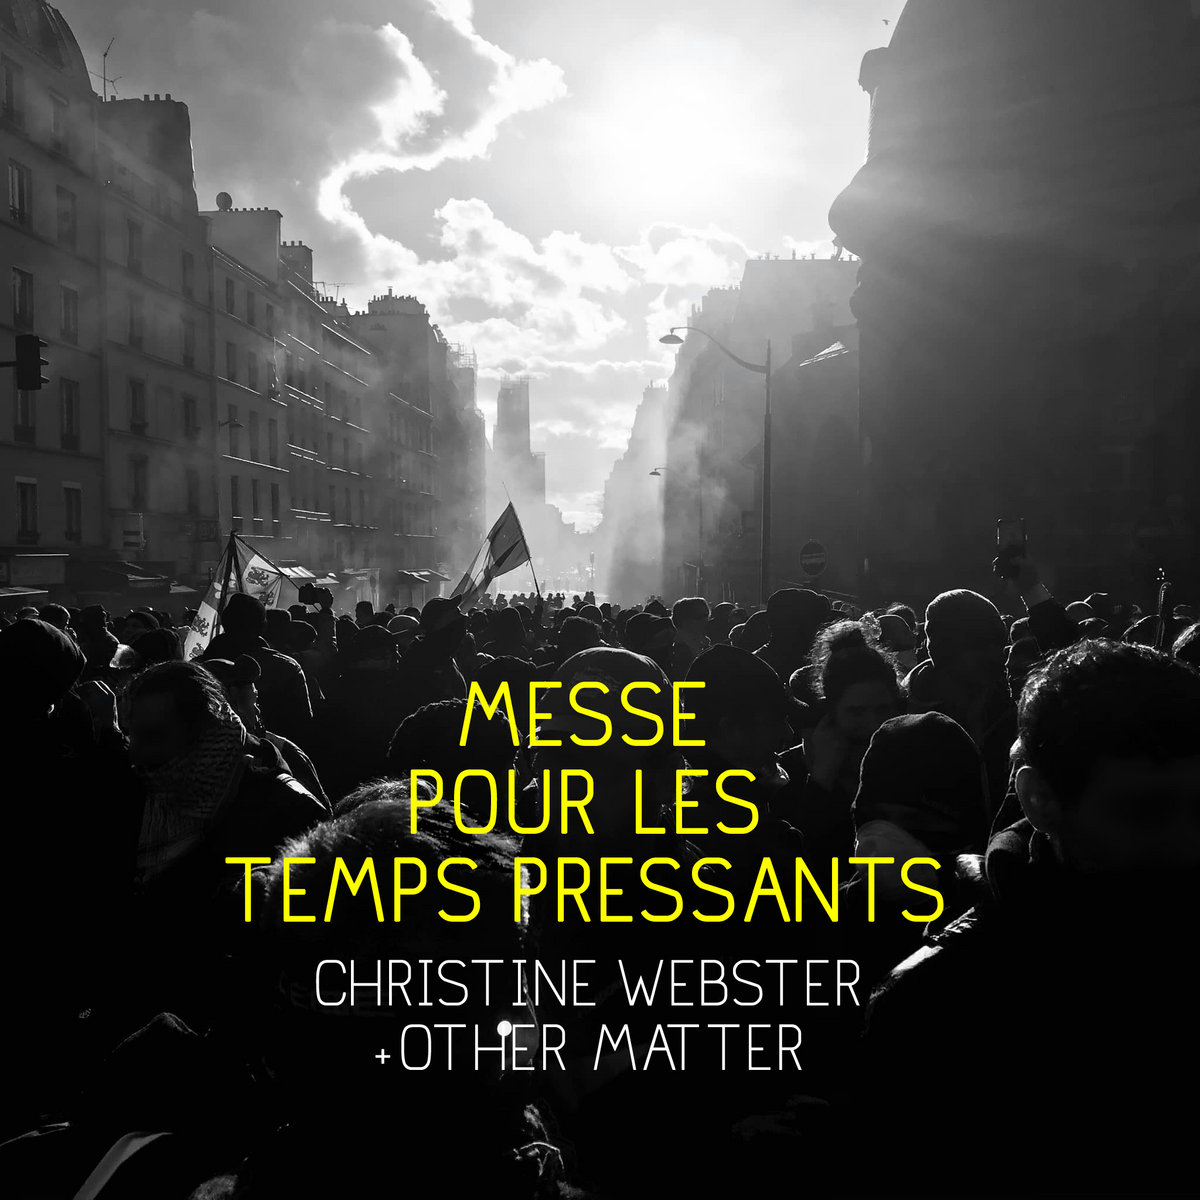 Other matter